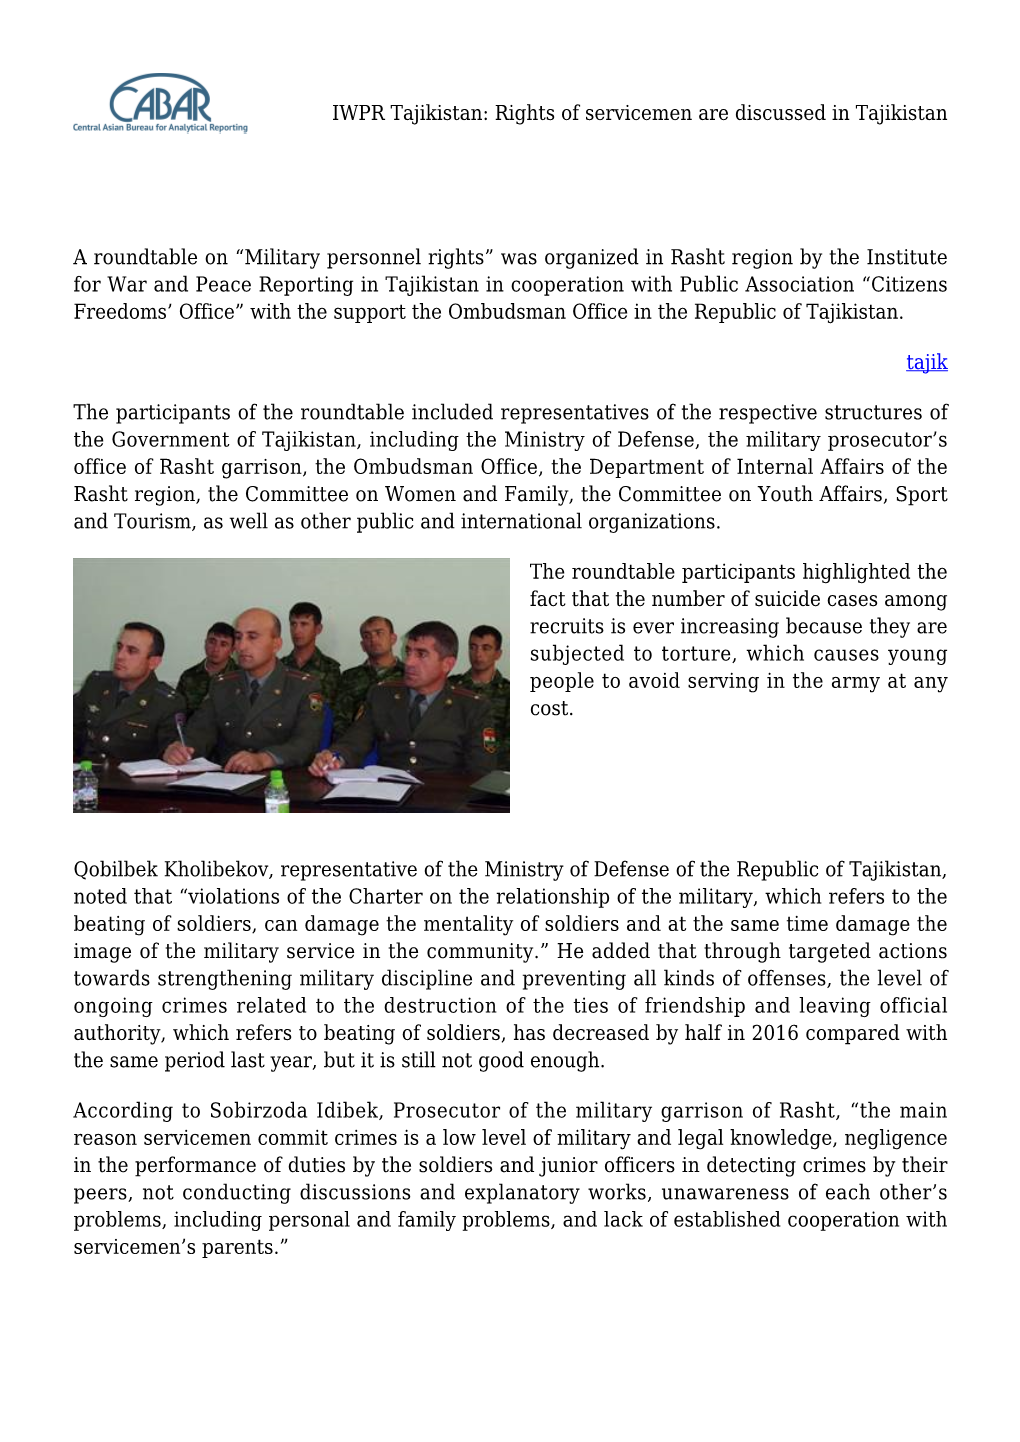 IWPR Tajikistan: Rights of Servicemen Are Discussed in Tajikistan